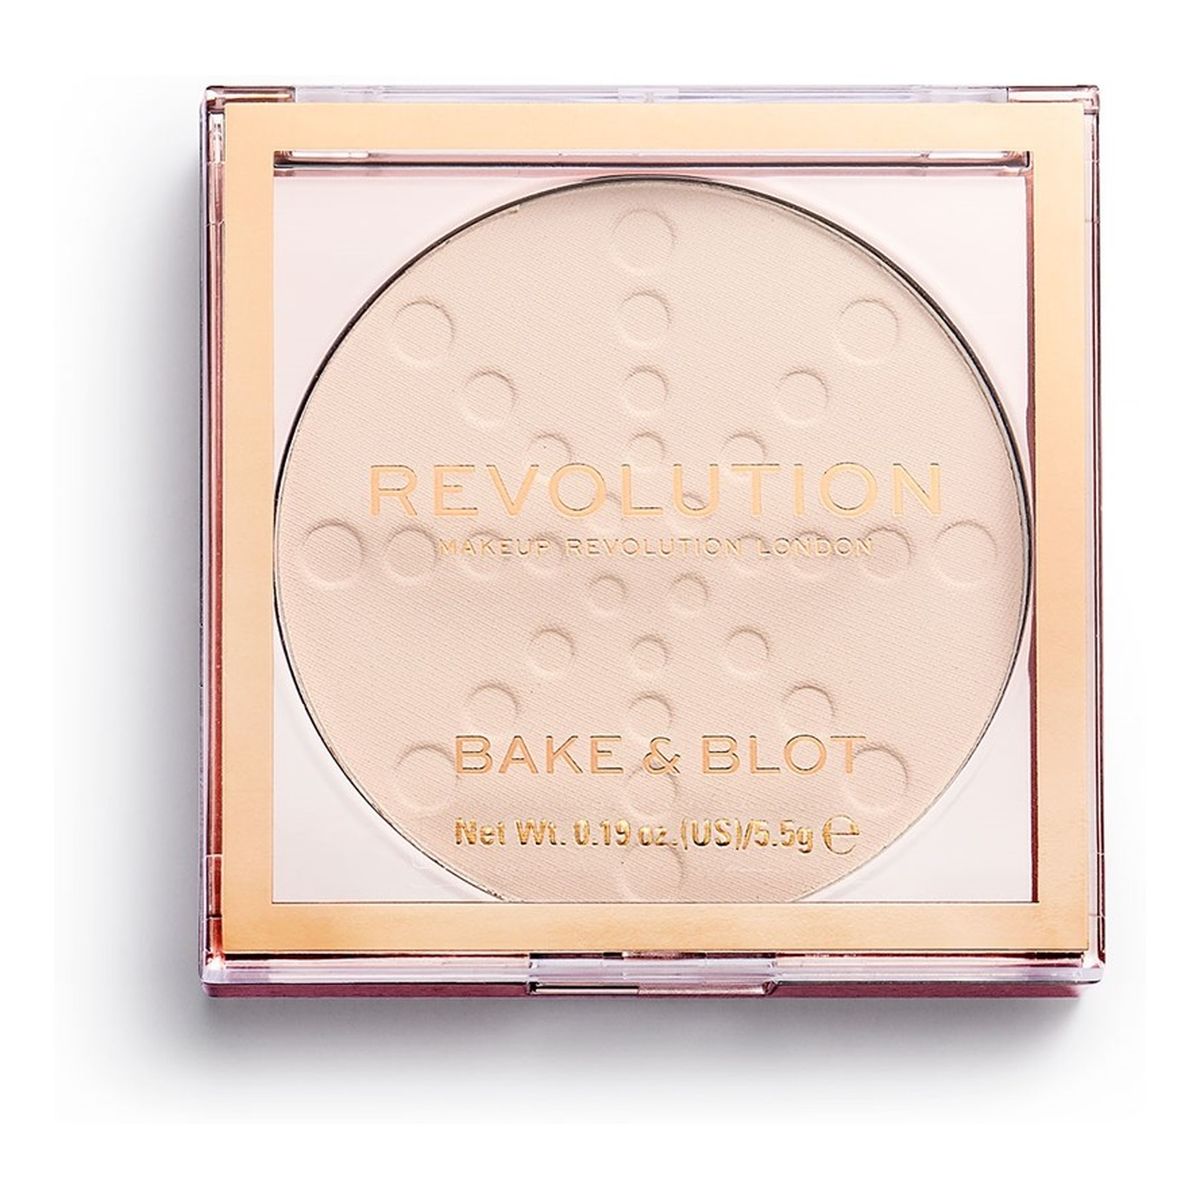 Makeup Revolution Bake & Blot Matujący Puder Prasowany Utrwalający Makijaż Translucent